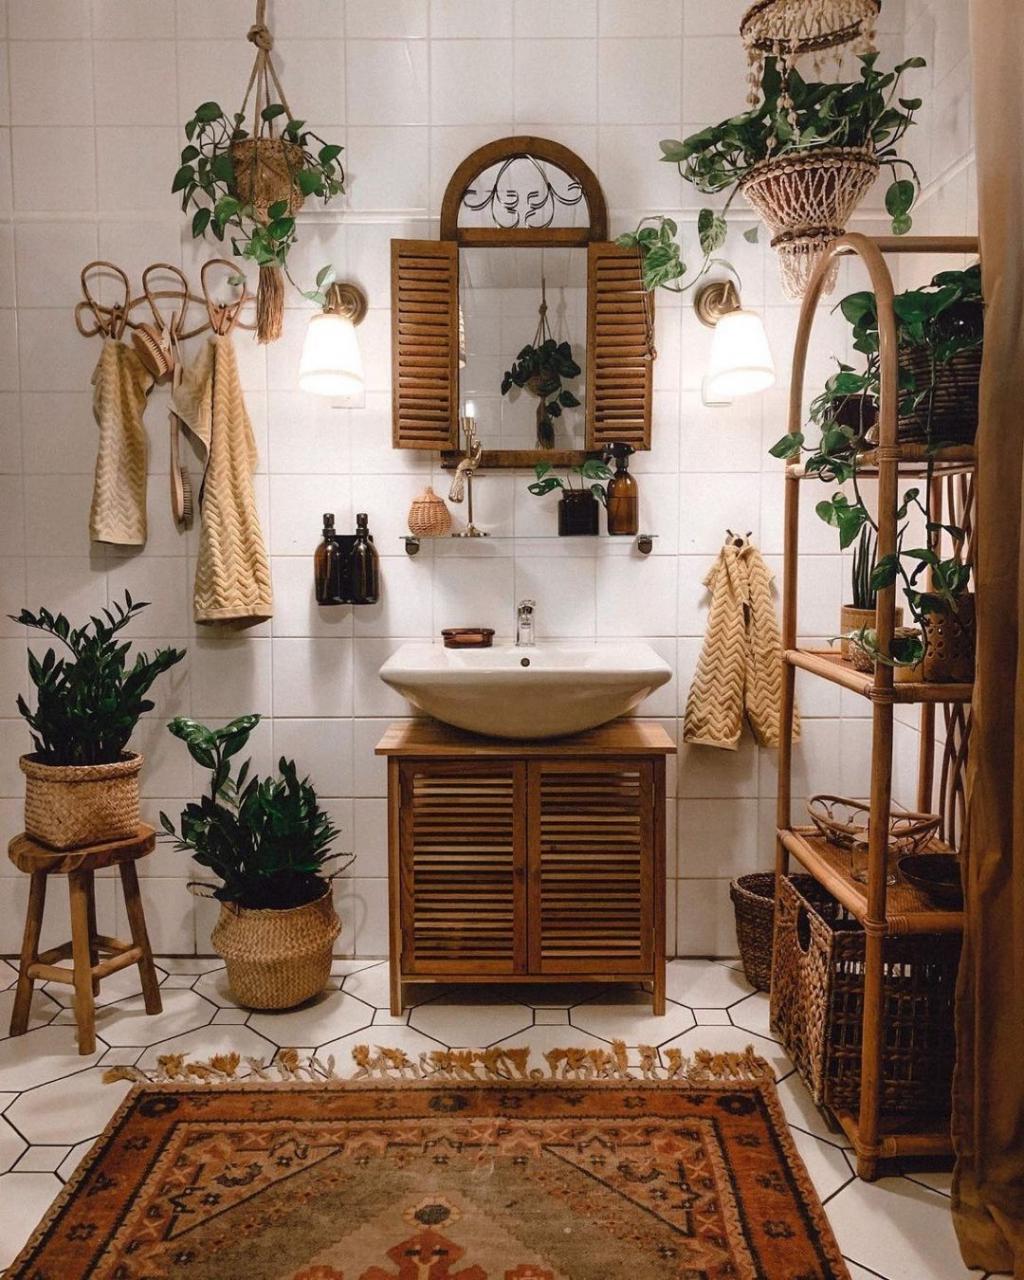 BOHEMIAN DECOR on Instagram “Loving the earth tones in this bathroom 🤎